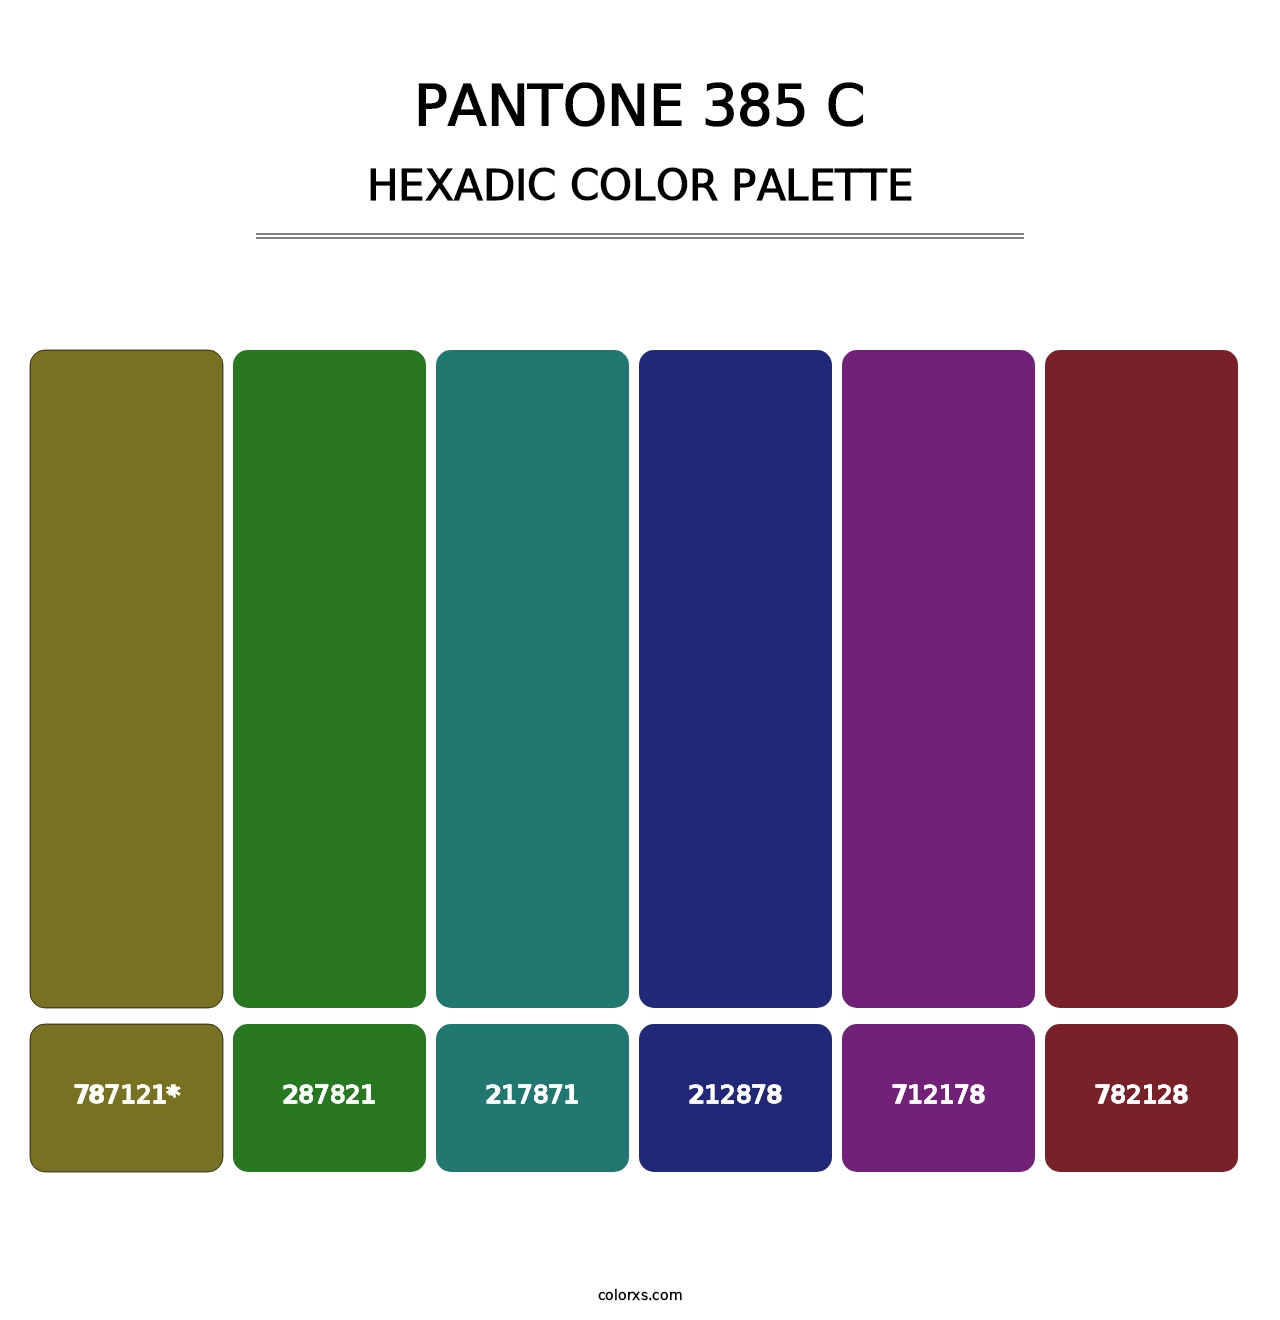 PANTONE 385 C - Hexadic Color Palette